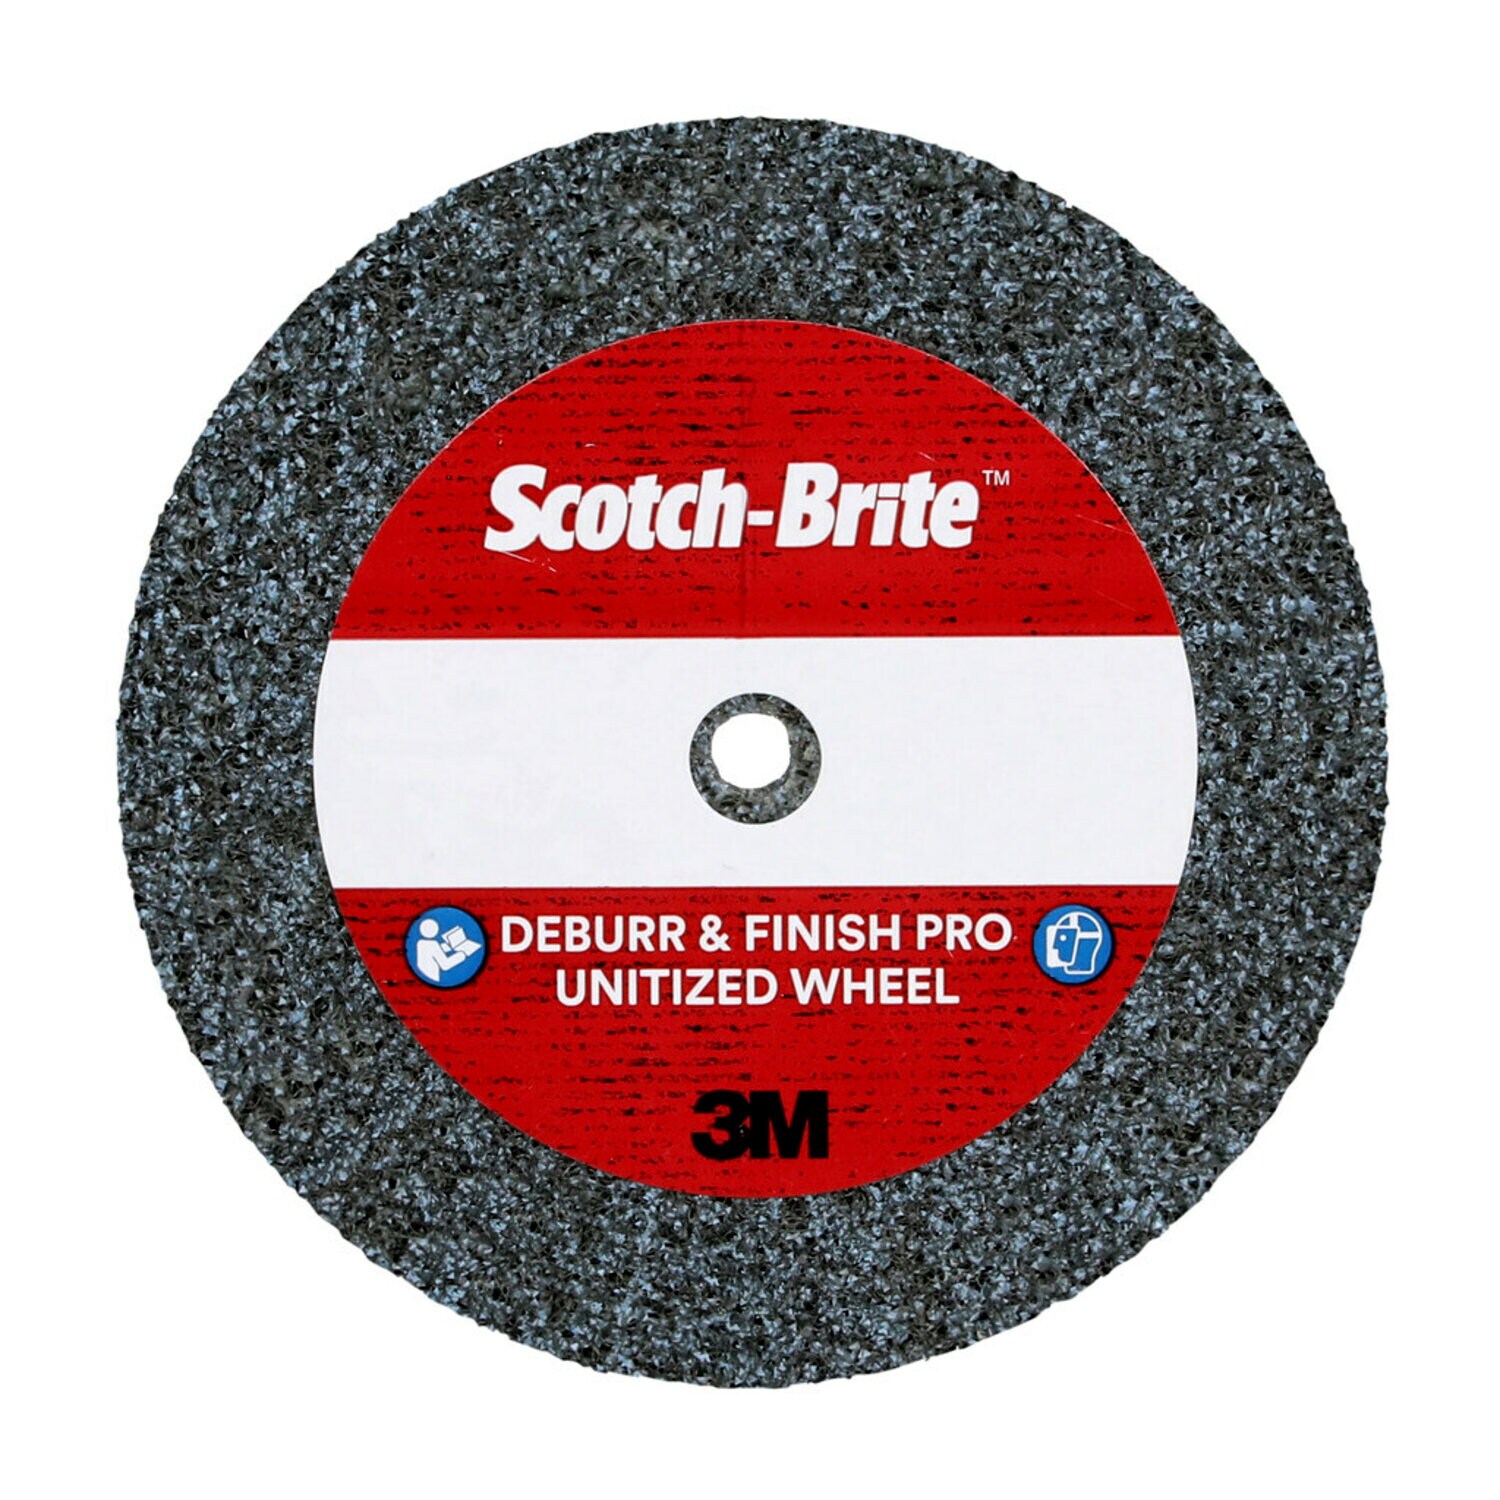 7100287415 - Scotch-Brite Deburr & Finish Pro Unitized Wheel, DP-UW, 8C Coarse+, 2
in x 1 in x 1/4 in